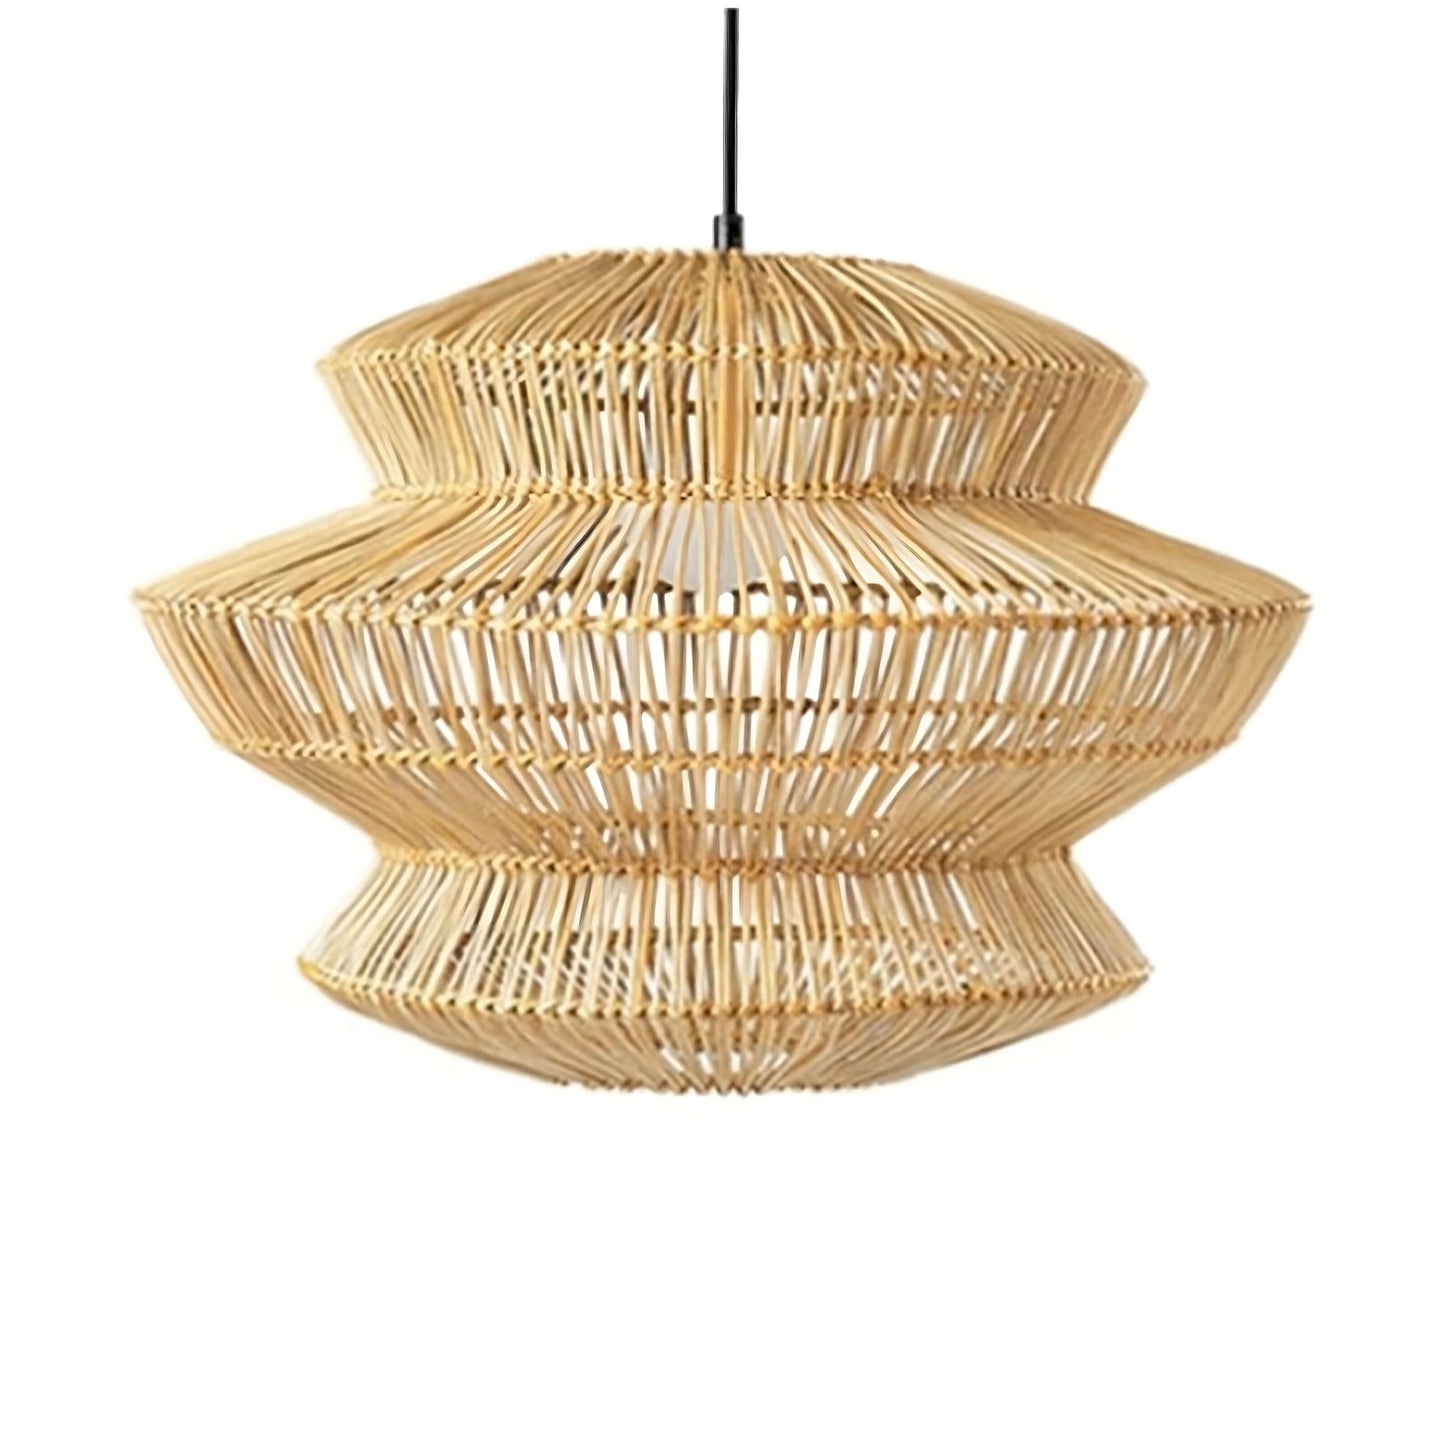 Country Garden Style- Multi-layers Rattan Lamp- Kitchen Island Hanging Light arclightsdesign